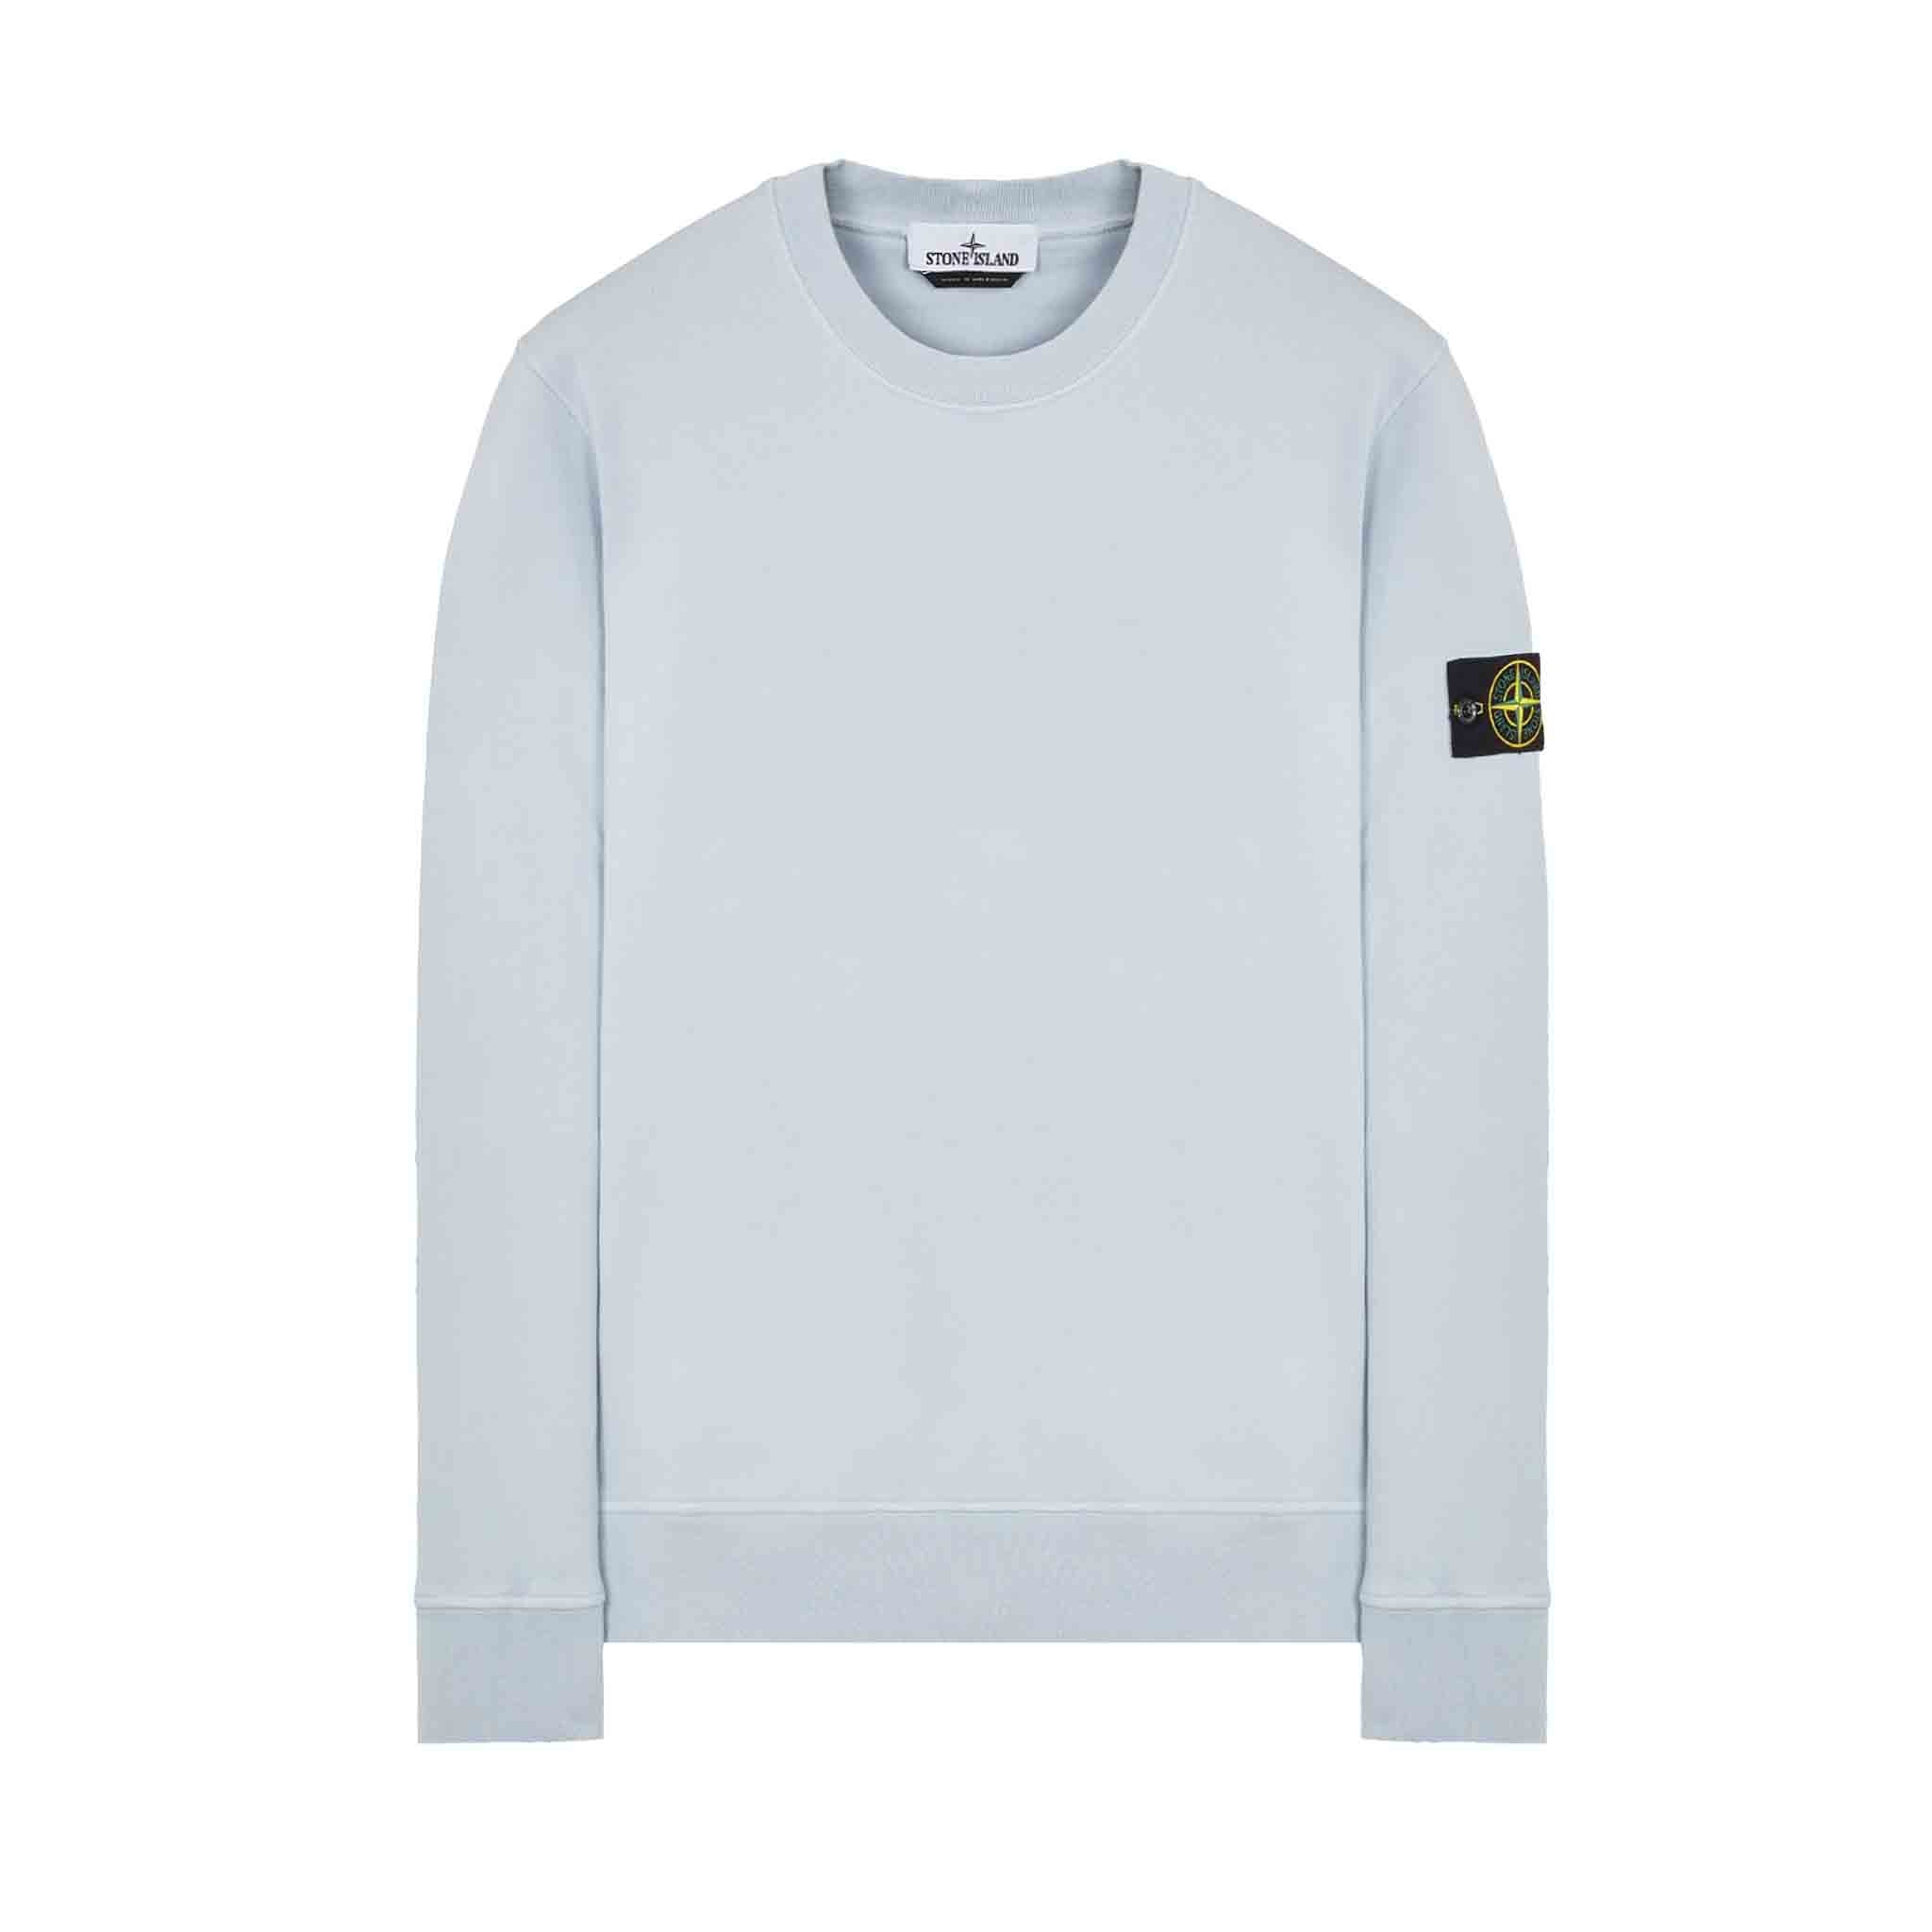 Stone Island Garment Dyed Crewneck Sweatshirt in Sky Blue